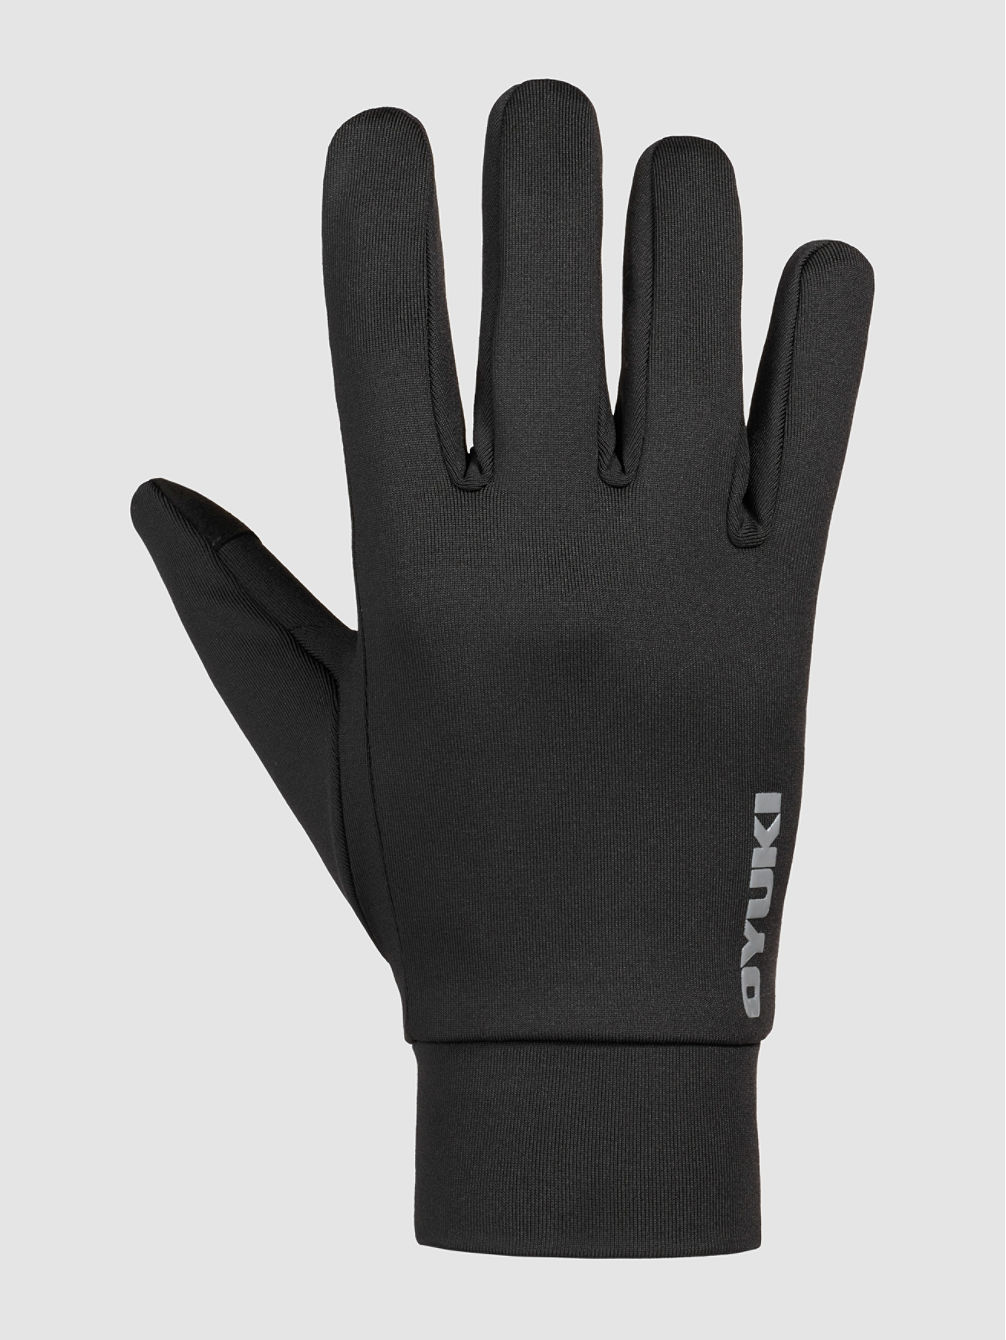 Oyuki Proliner Liner Gloves - buy at Blue Tomato